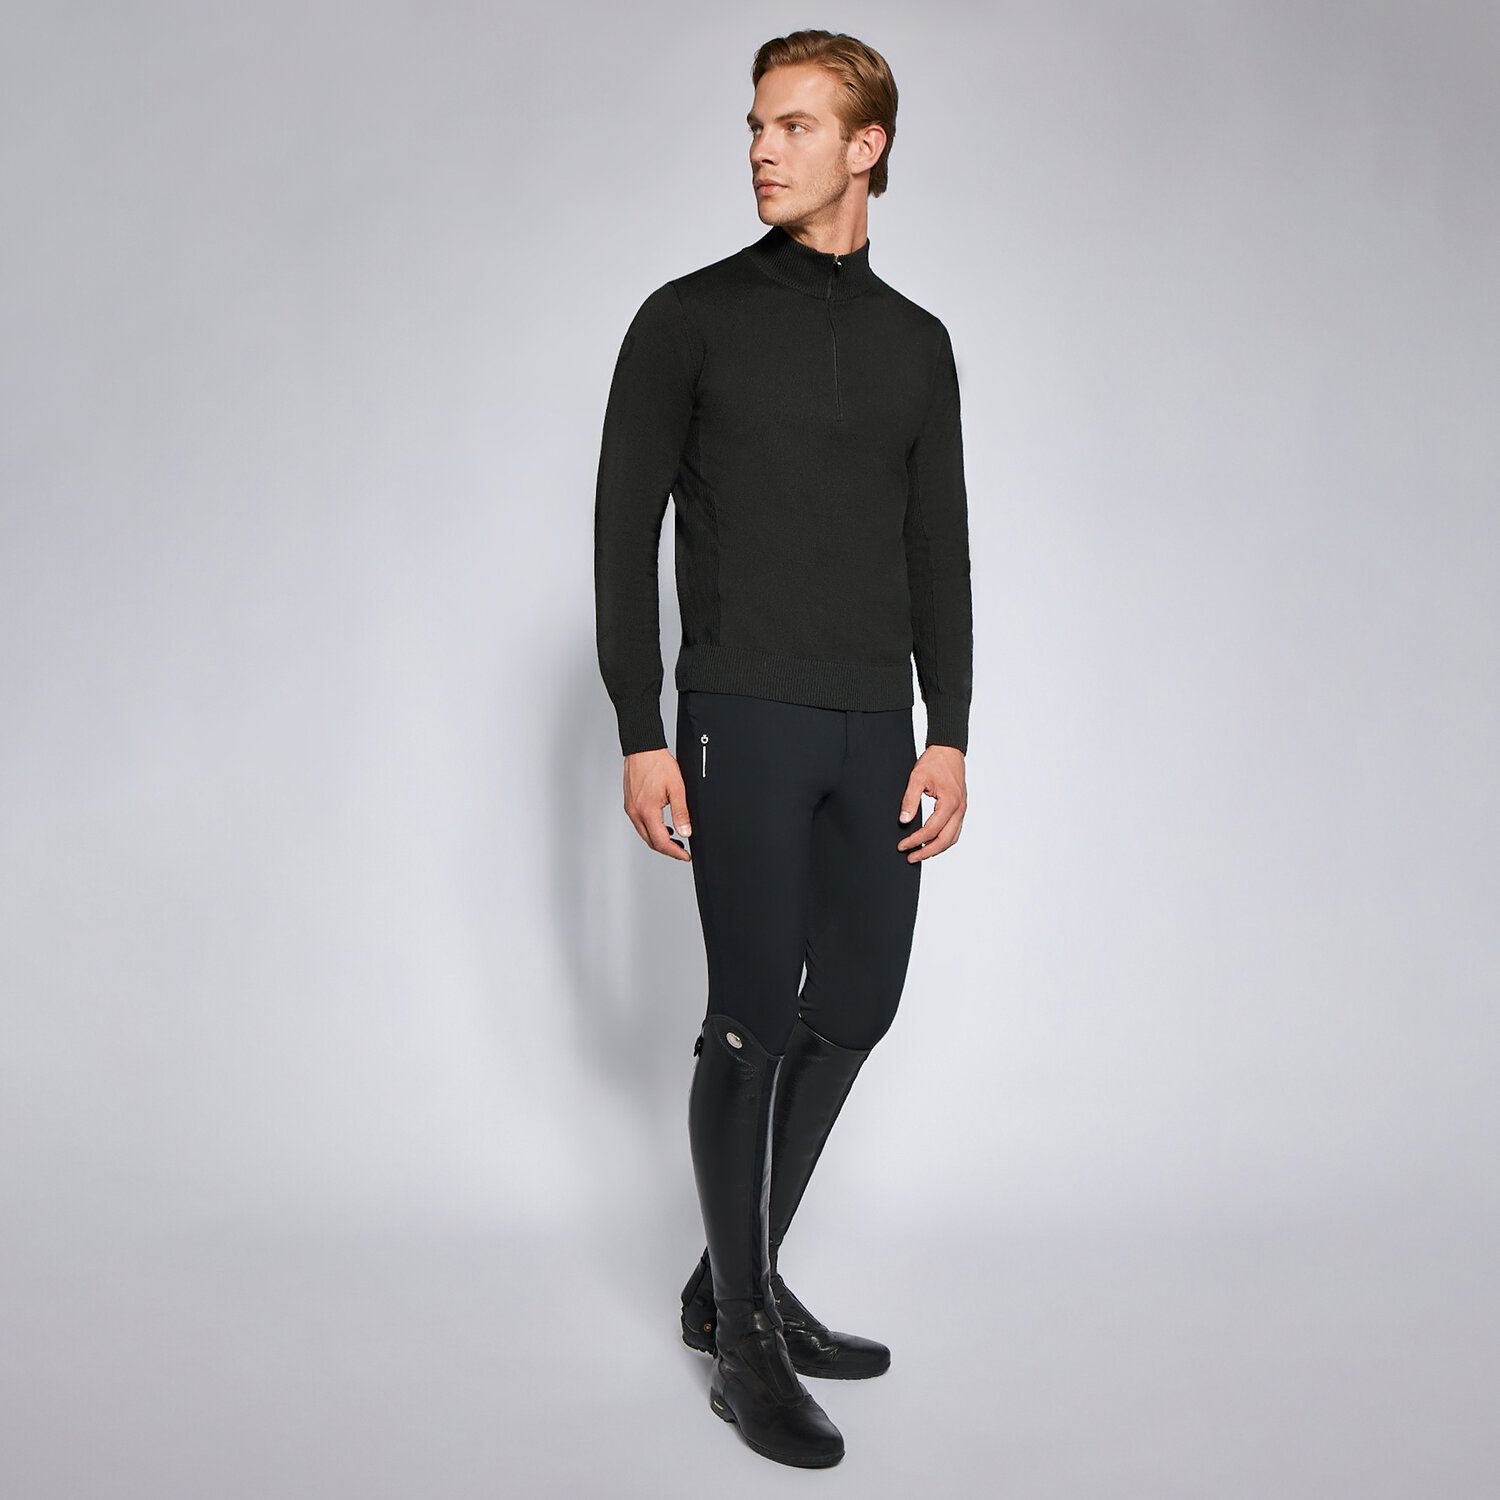 Cavalleria Toscana Men's Revolution sweater BLACK-6